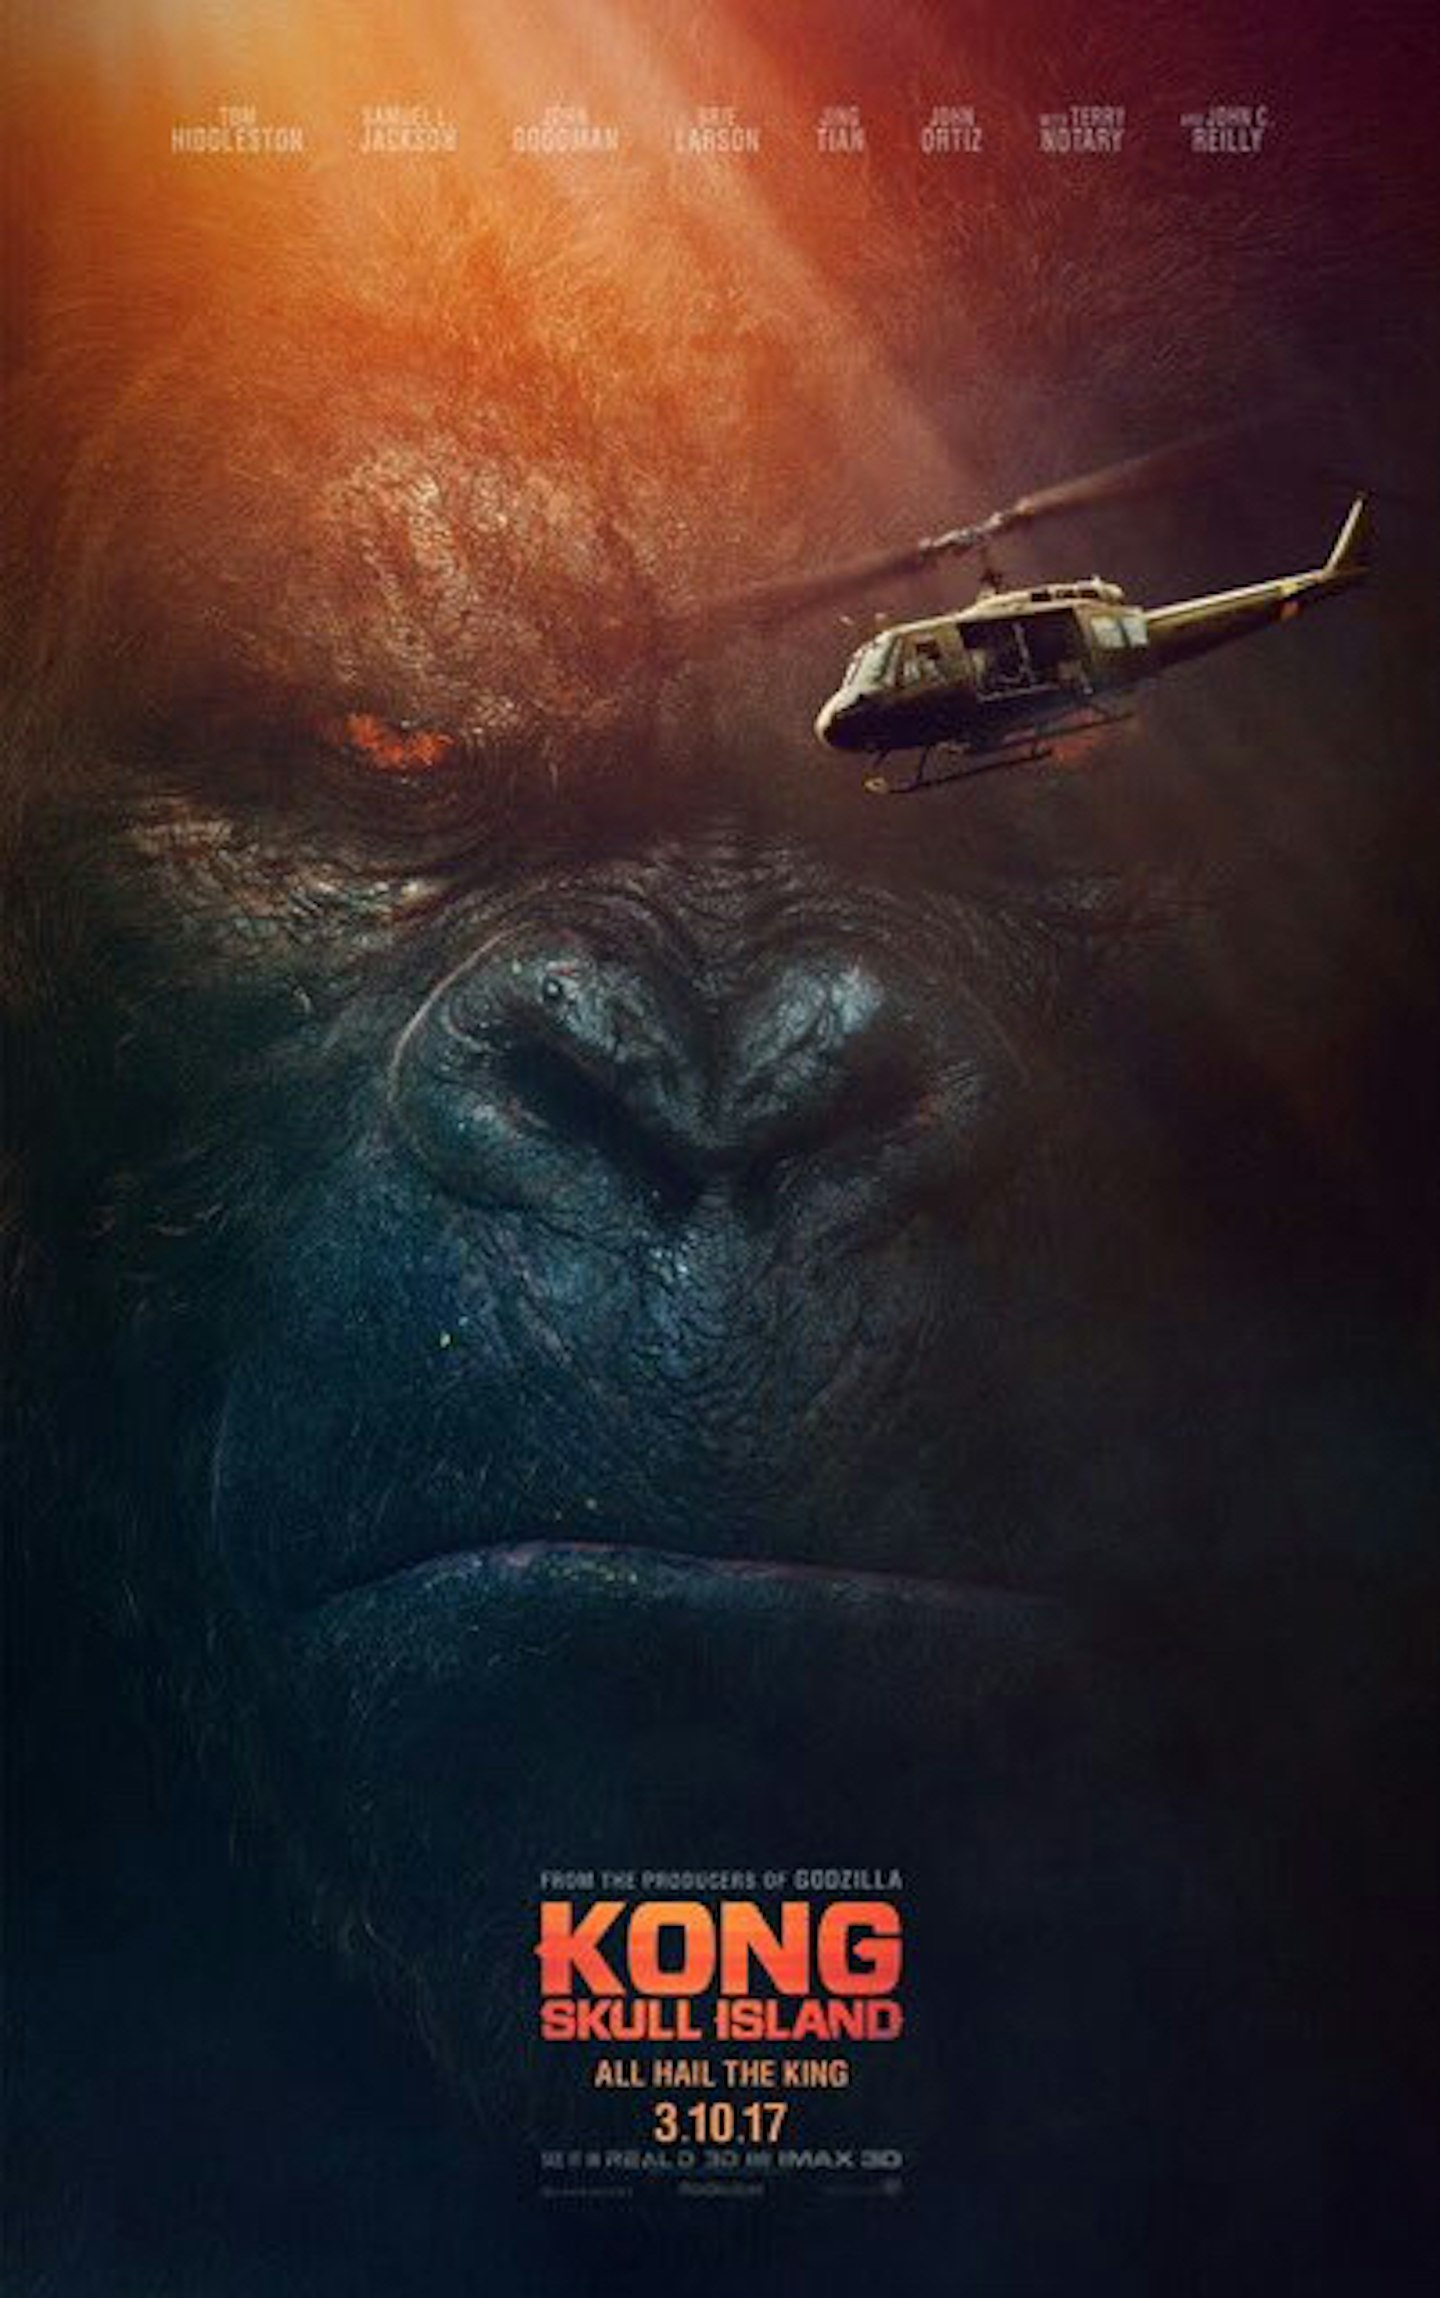 Kong: Skull Island posters